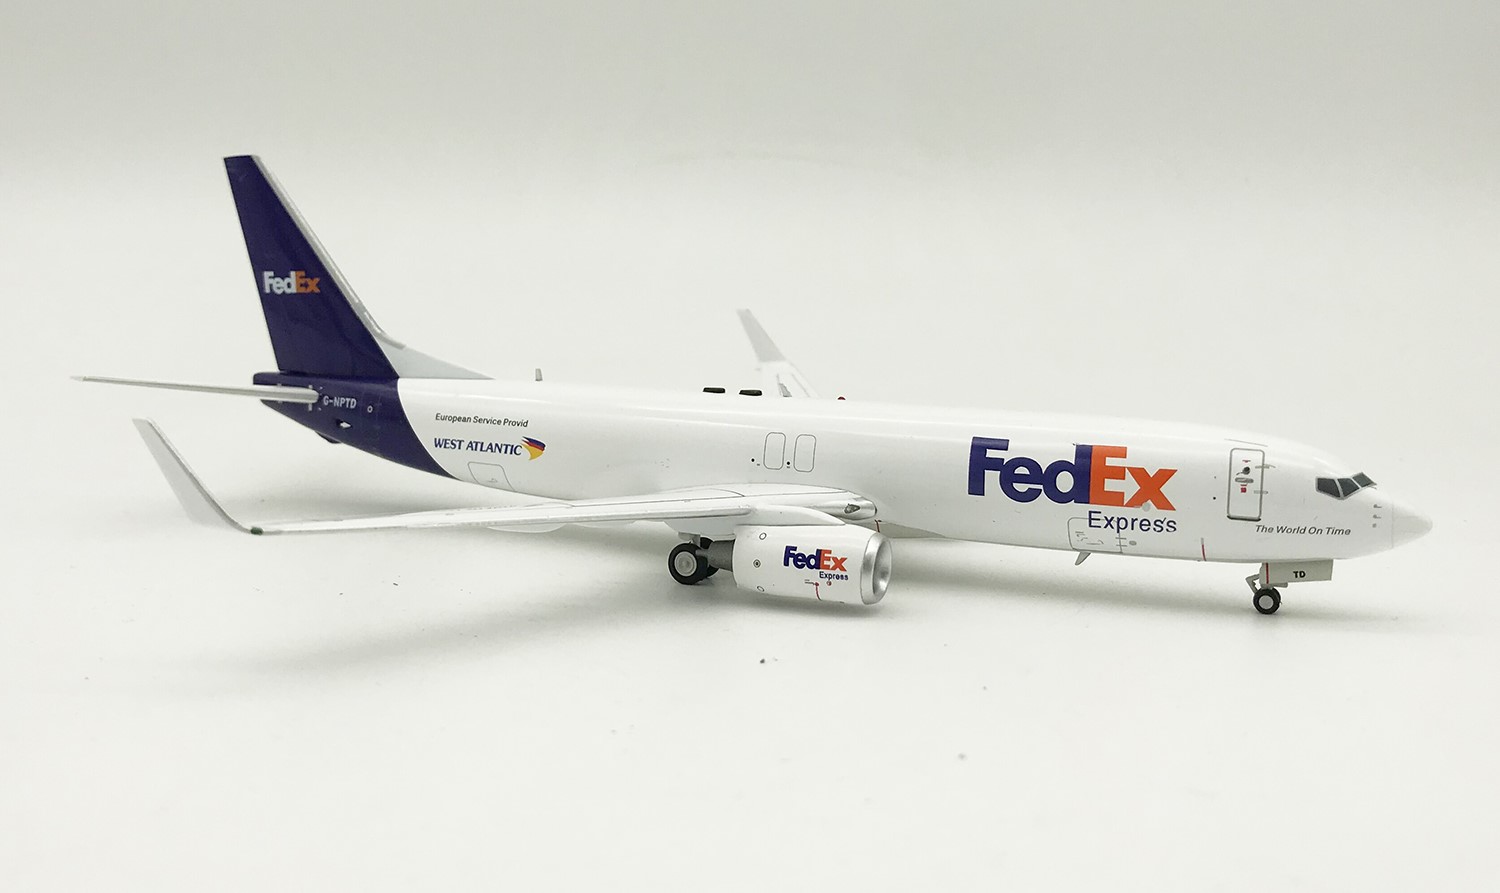 J Fox 7378015 1:200 Boeing 737 FedEx Plane Diecast Model